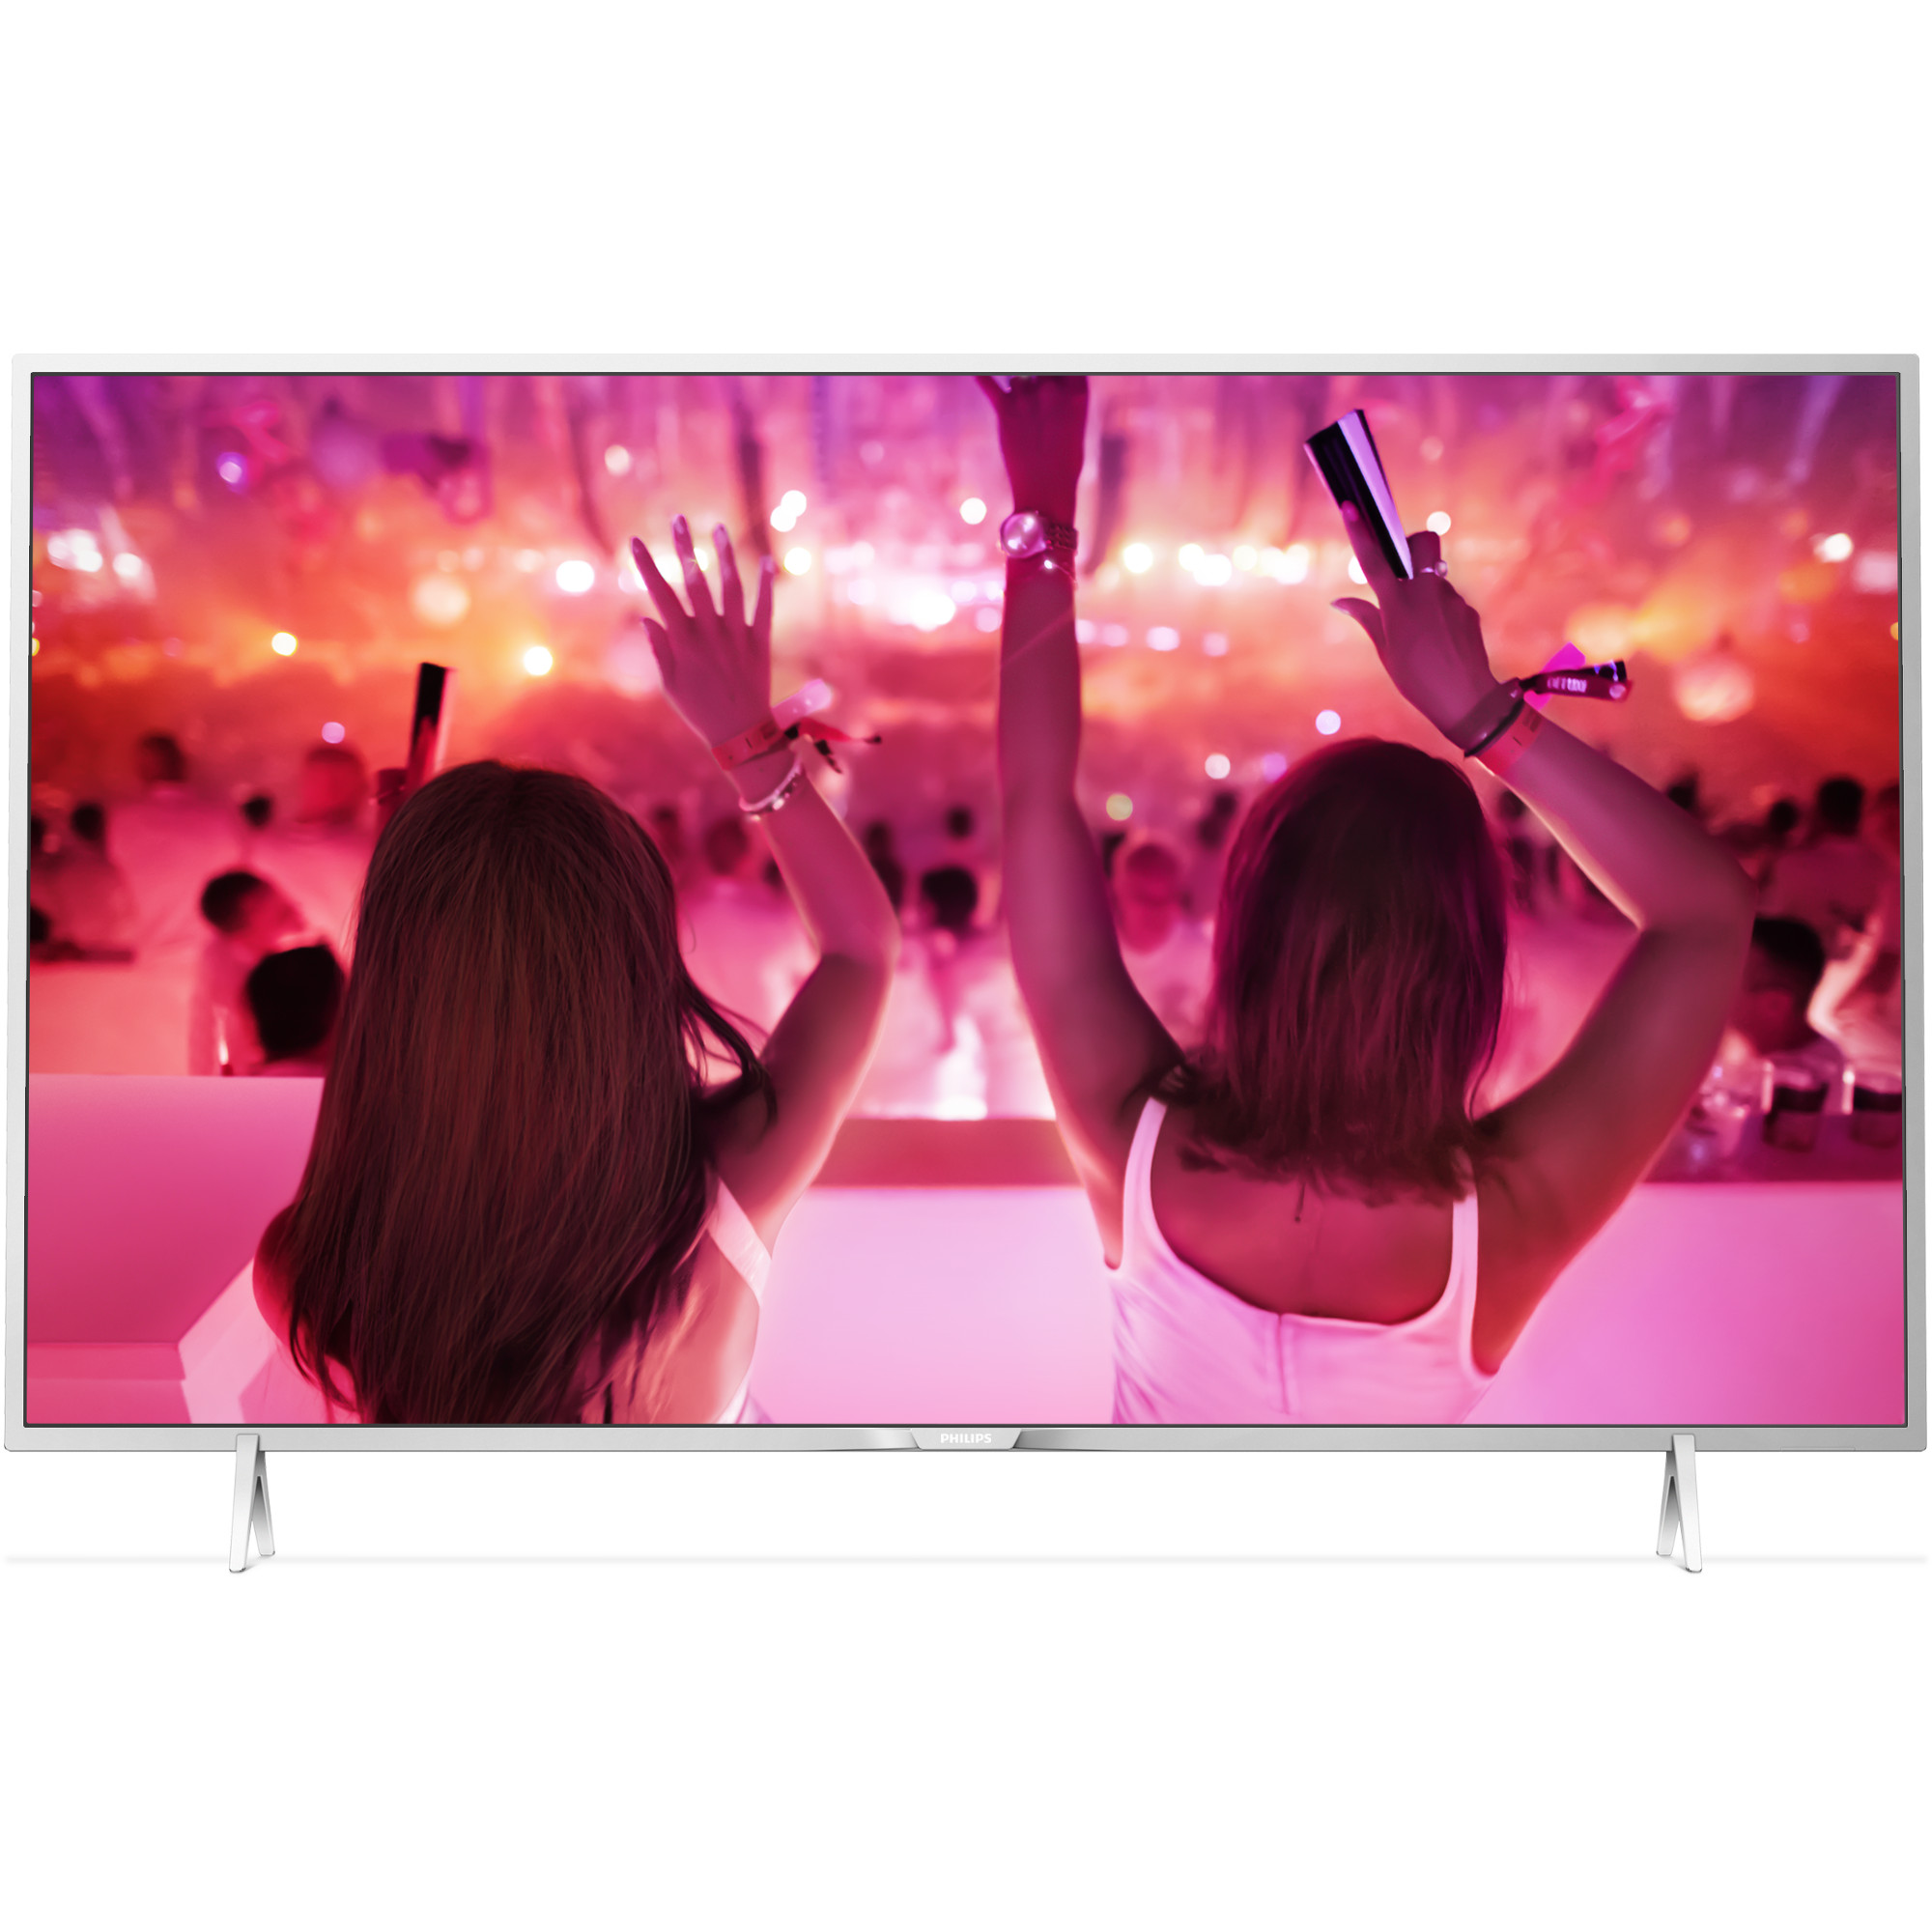  Televizor Smart LED, Philips 49PFS5501/12, 124 cm, Full HD, Android 